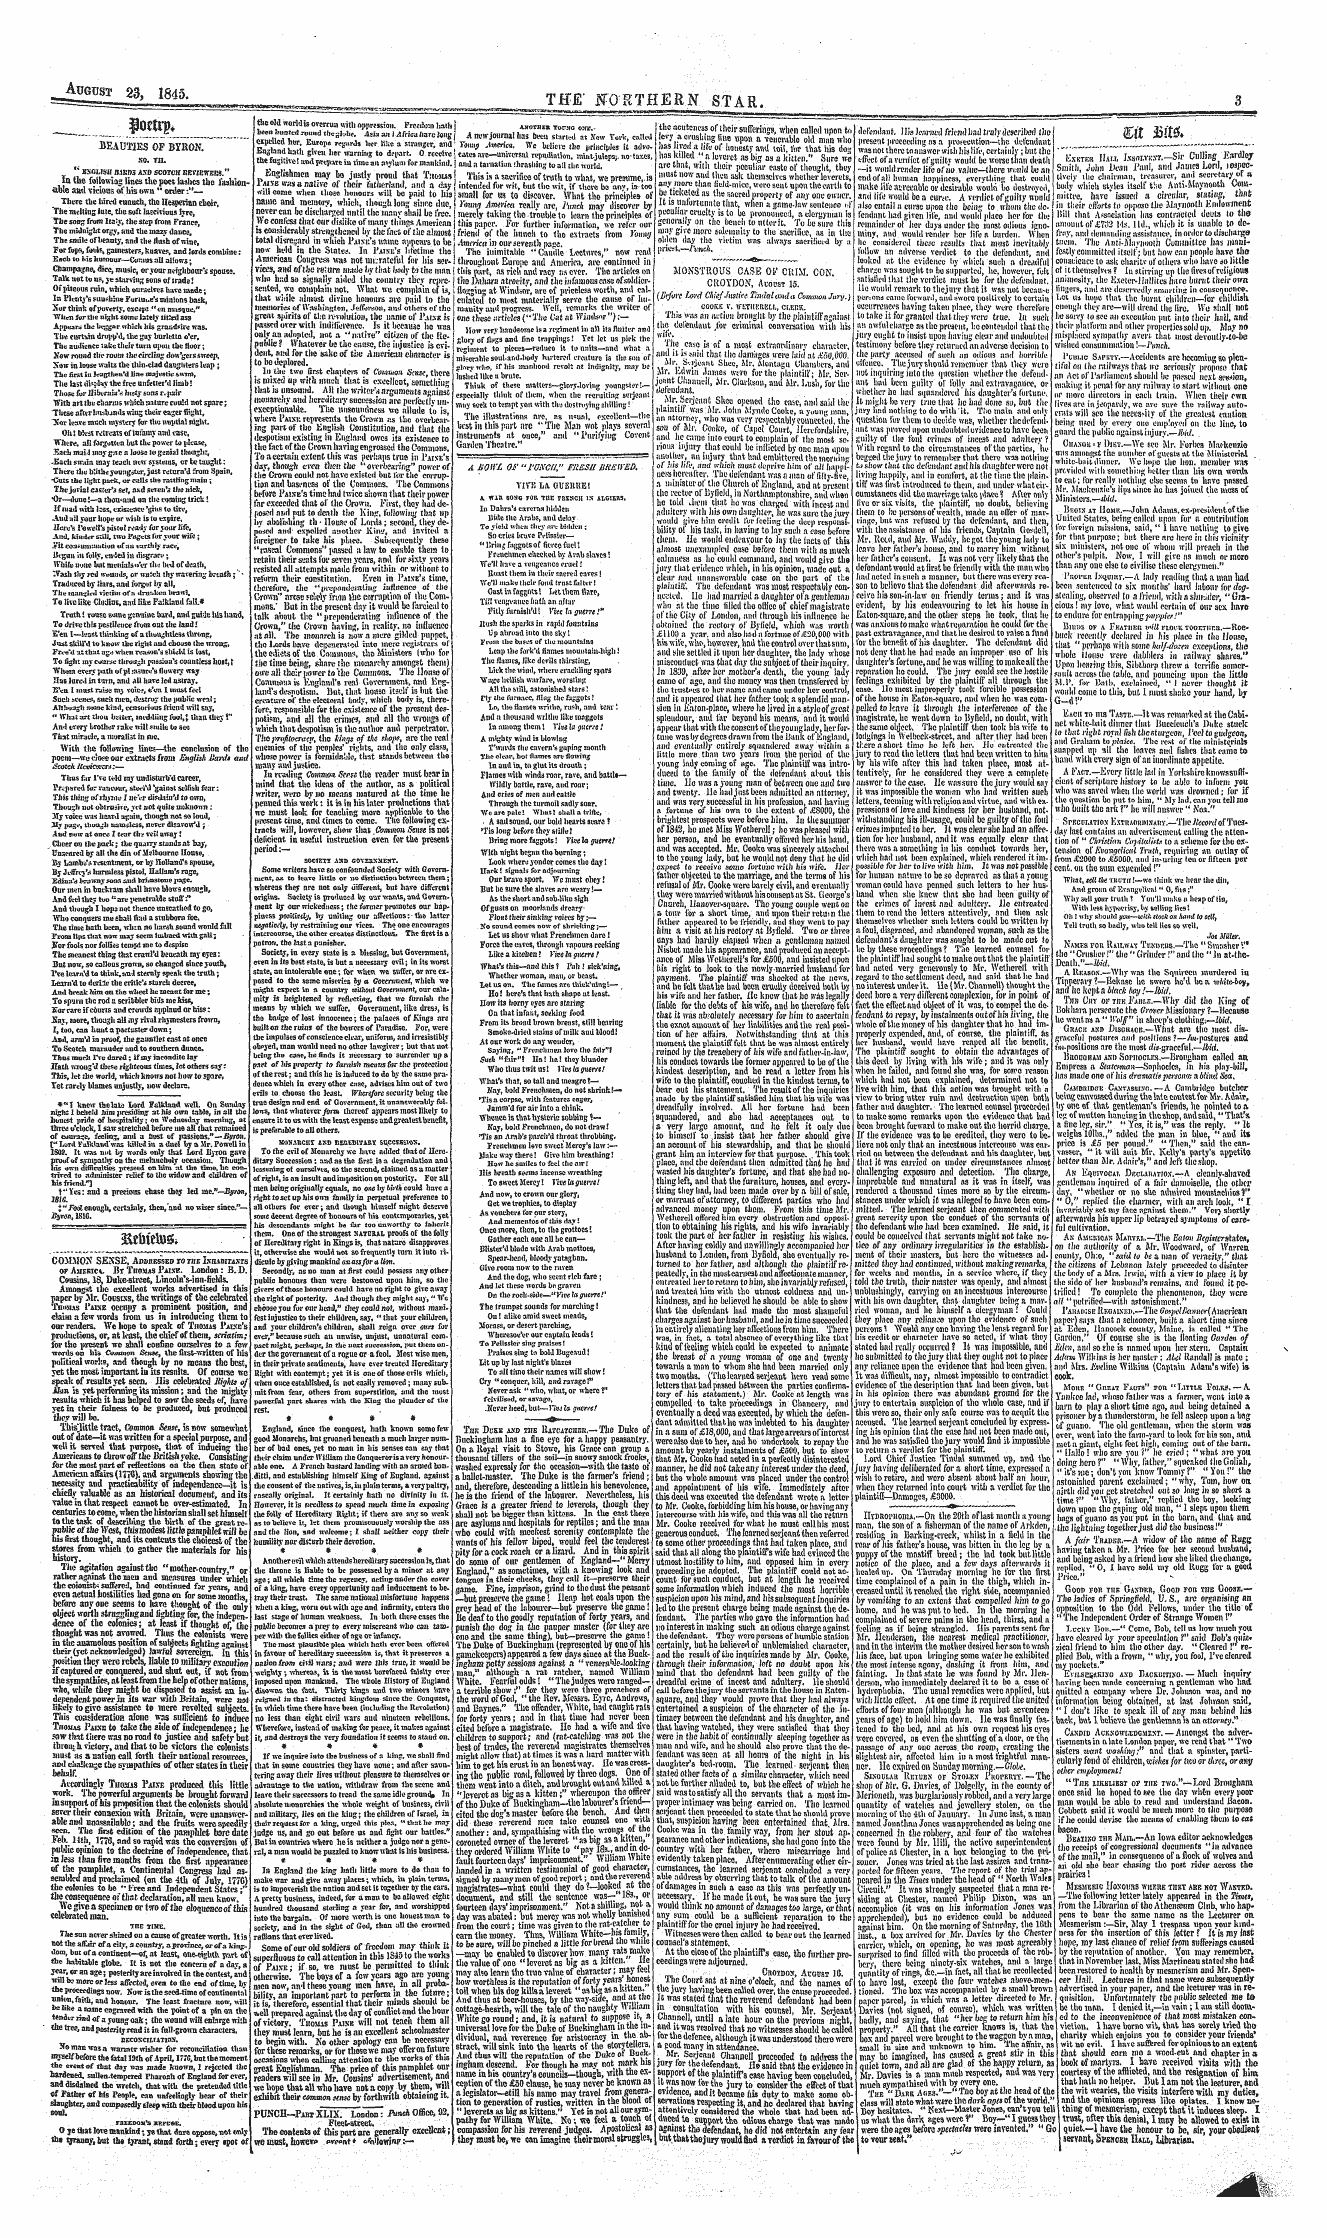 Northern Star (1837-1852): jS F Y, 4th edition - Tlik Duee Akd The Ratcatcher.— Tlie Dltk...